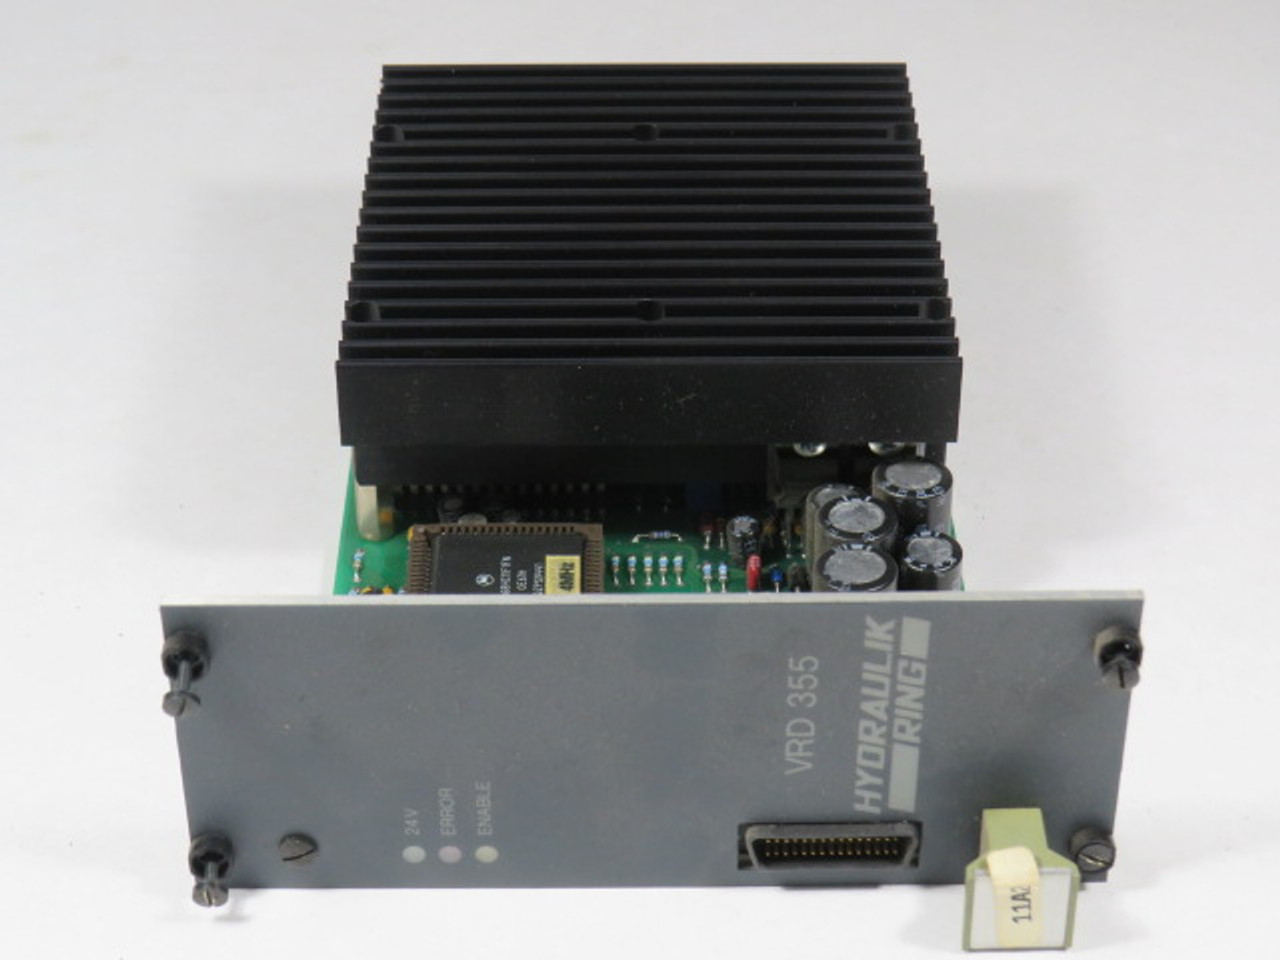 Hydraulik Ring VRD355-050-001 Power Amplifier Card 3.5A 4-20mA USED